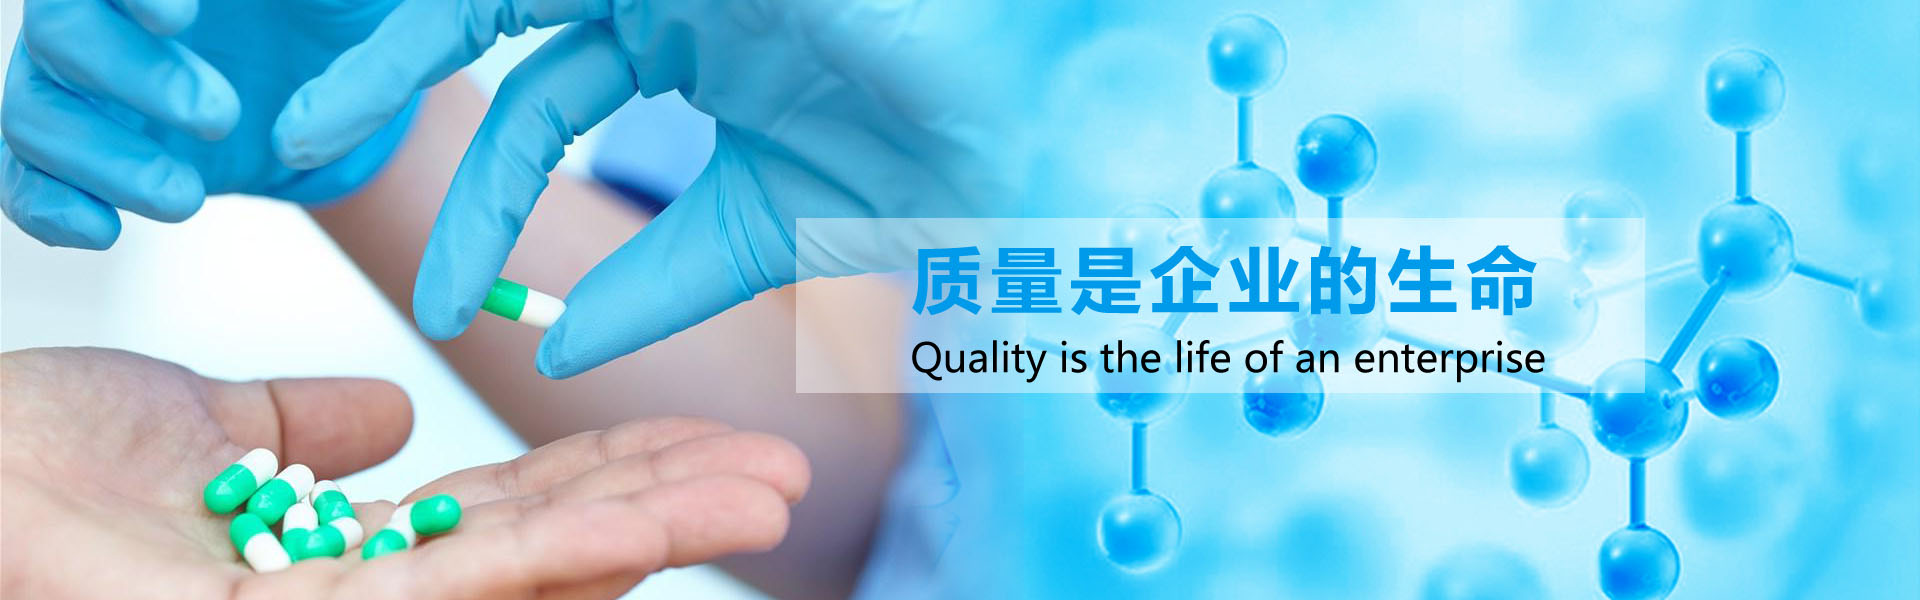 Anqing benro Pharmaceutical Technology Co., Ltd.